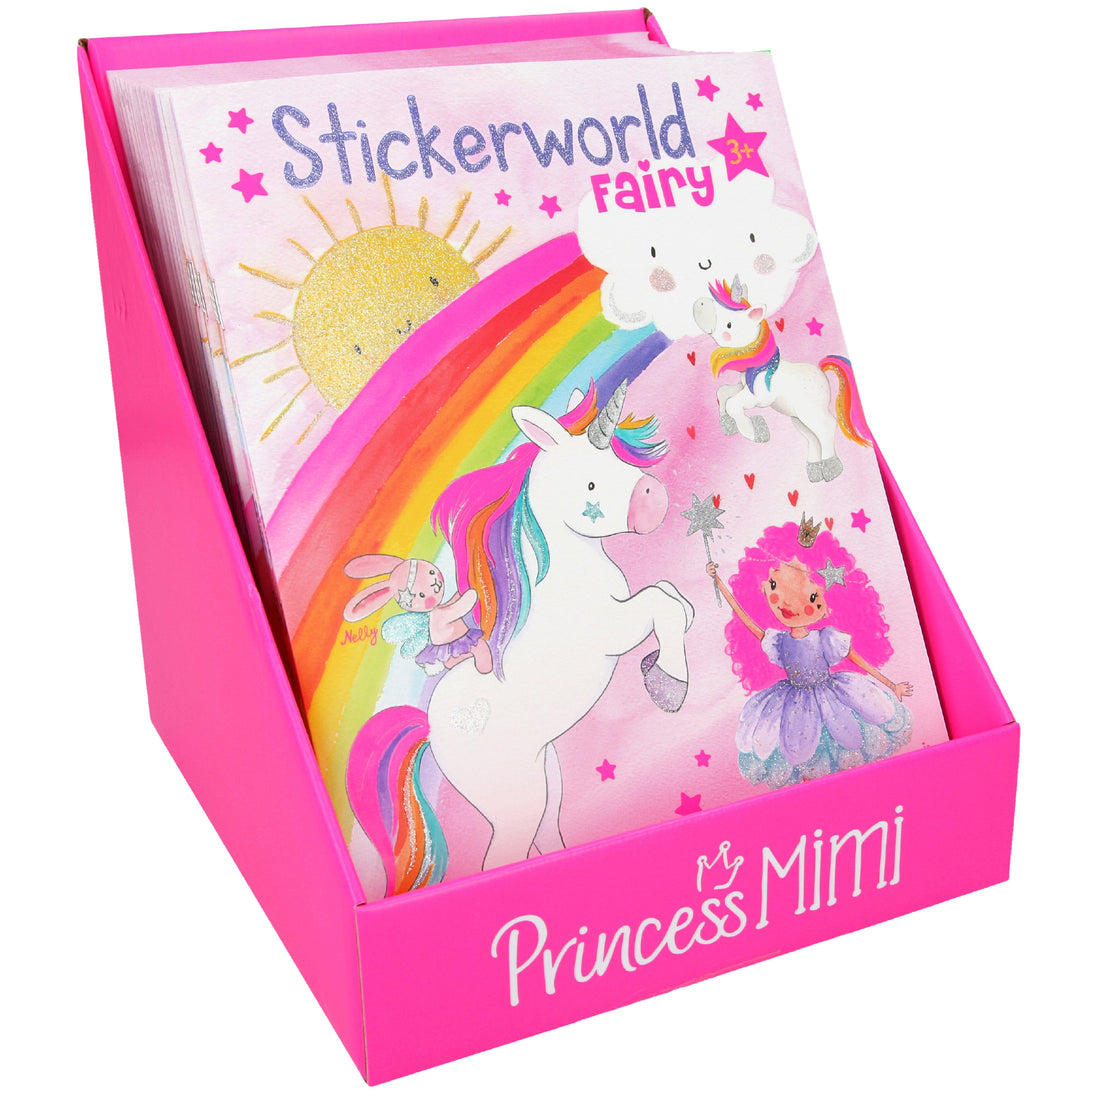 depesche-princess-mimi-fairy-stickerworld- (2)